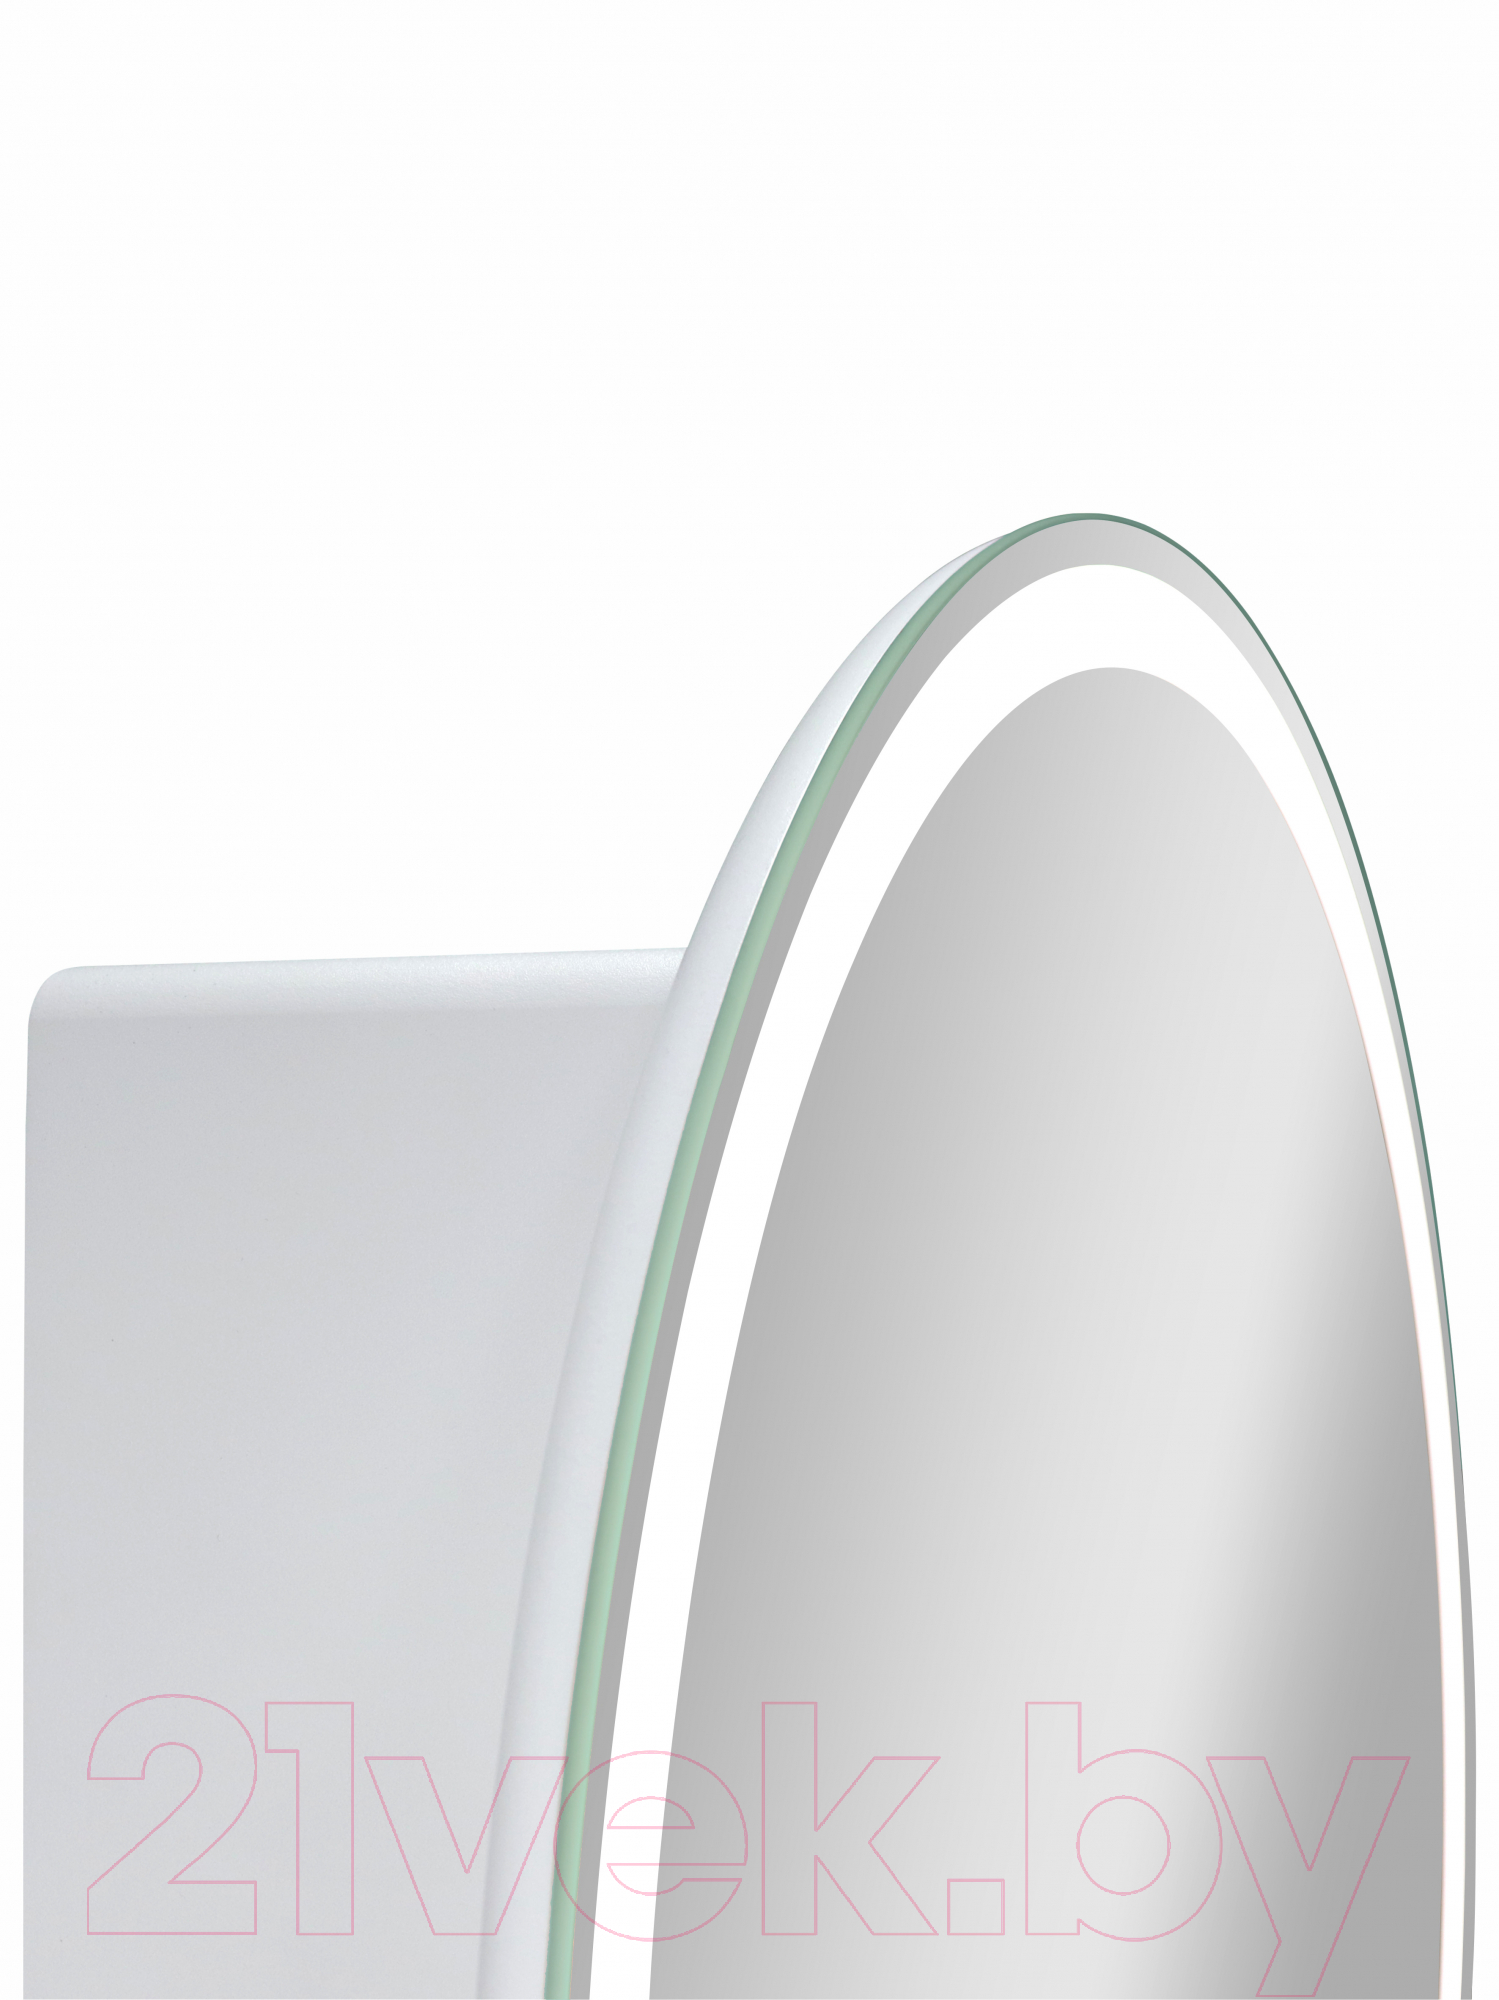 Шкаф с зеркалом для ванной Континент Torneo White Led D 600